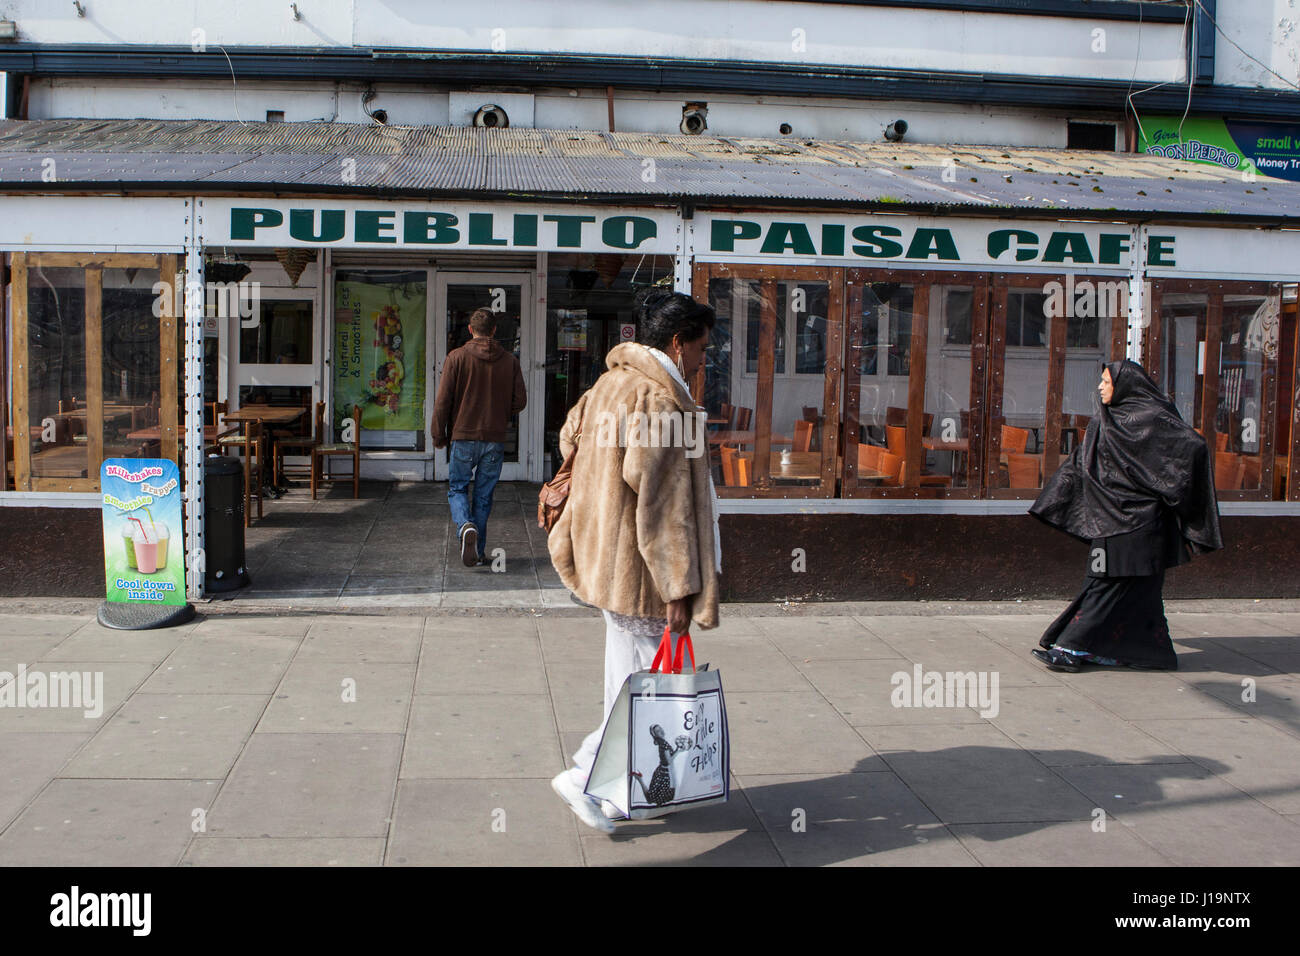 Pueblito Paisa Cafe in Tottenham High Street. Stock Photo